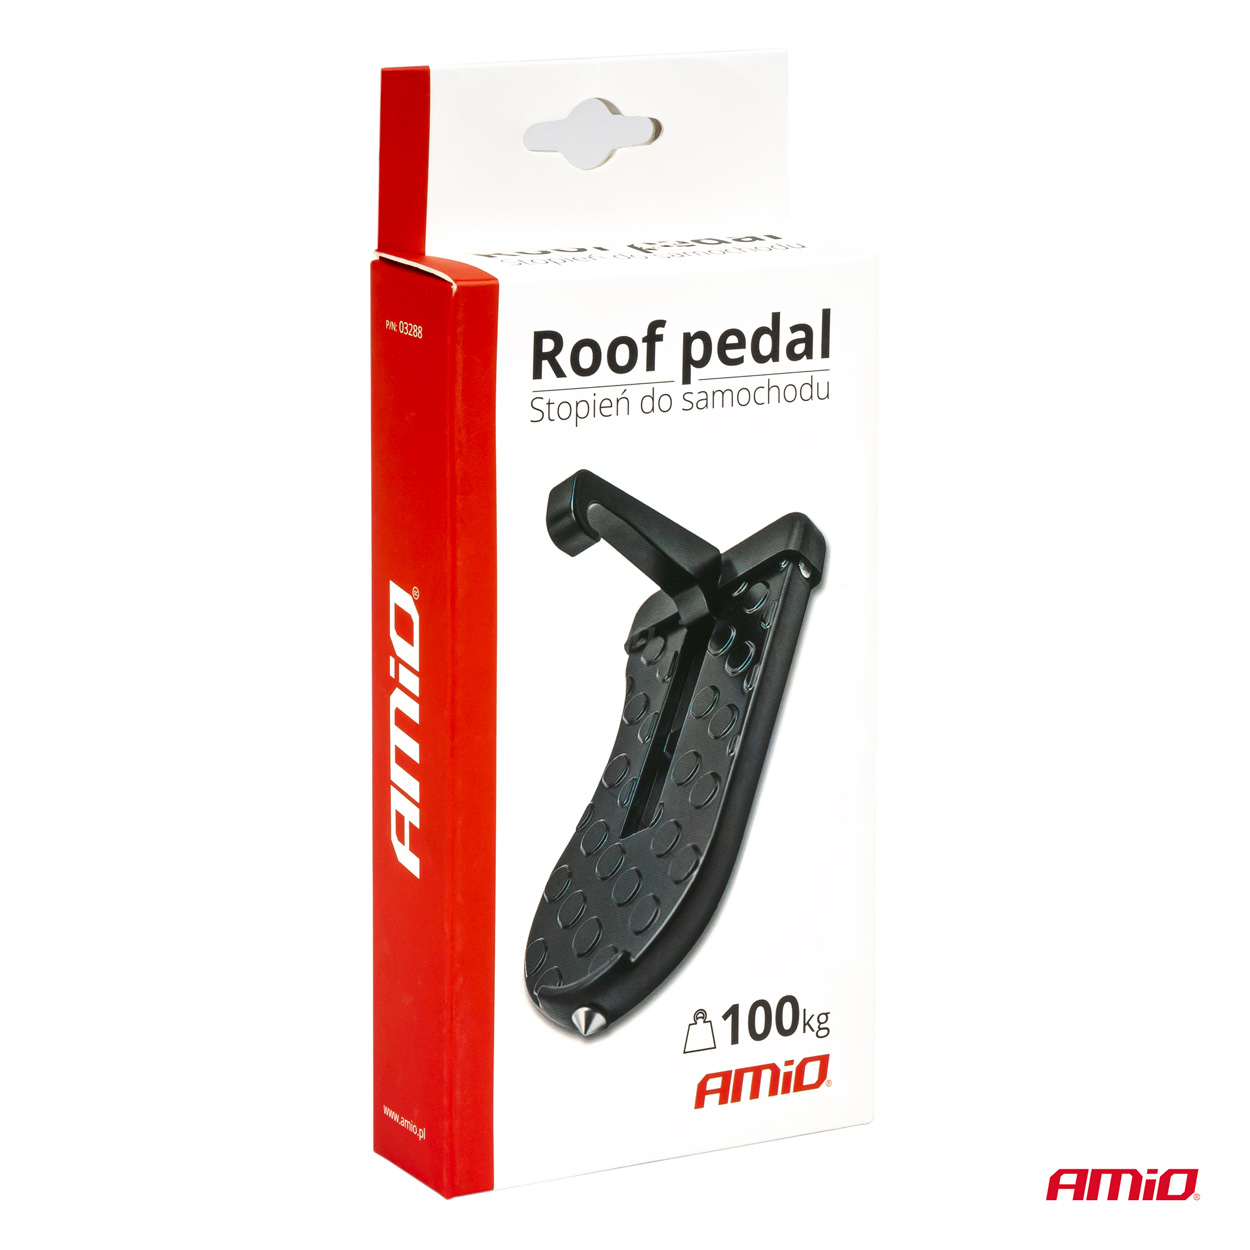 Roof pedal thumb